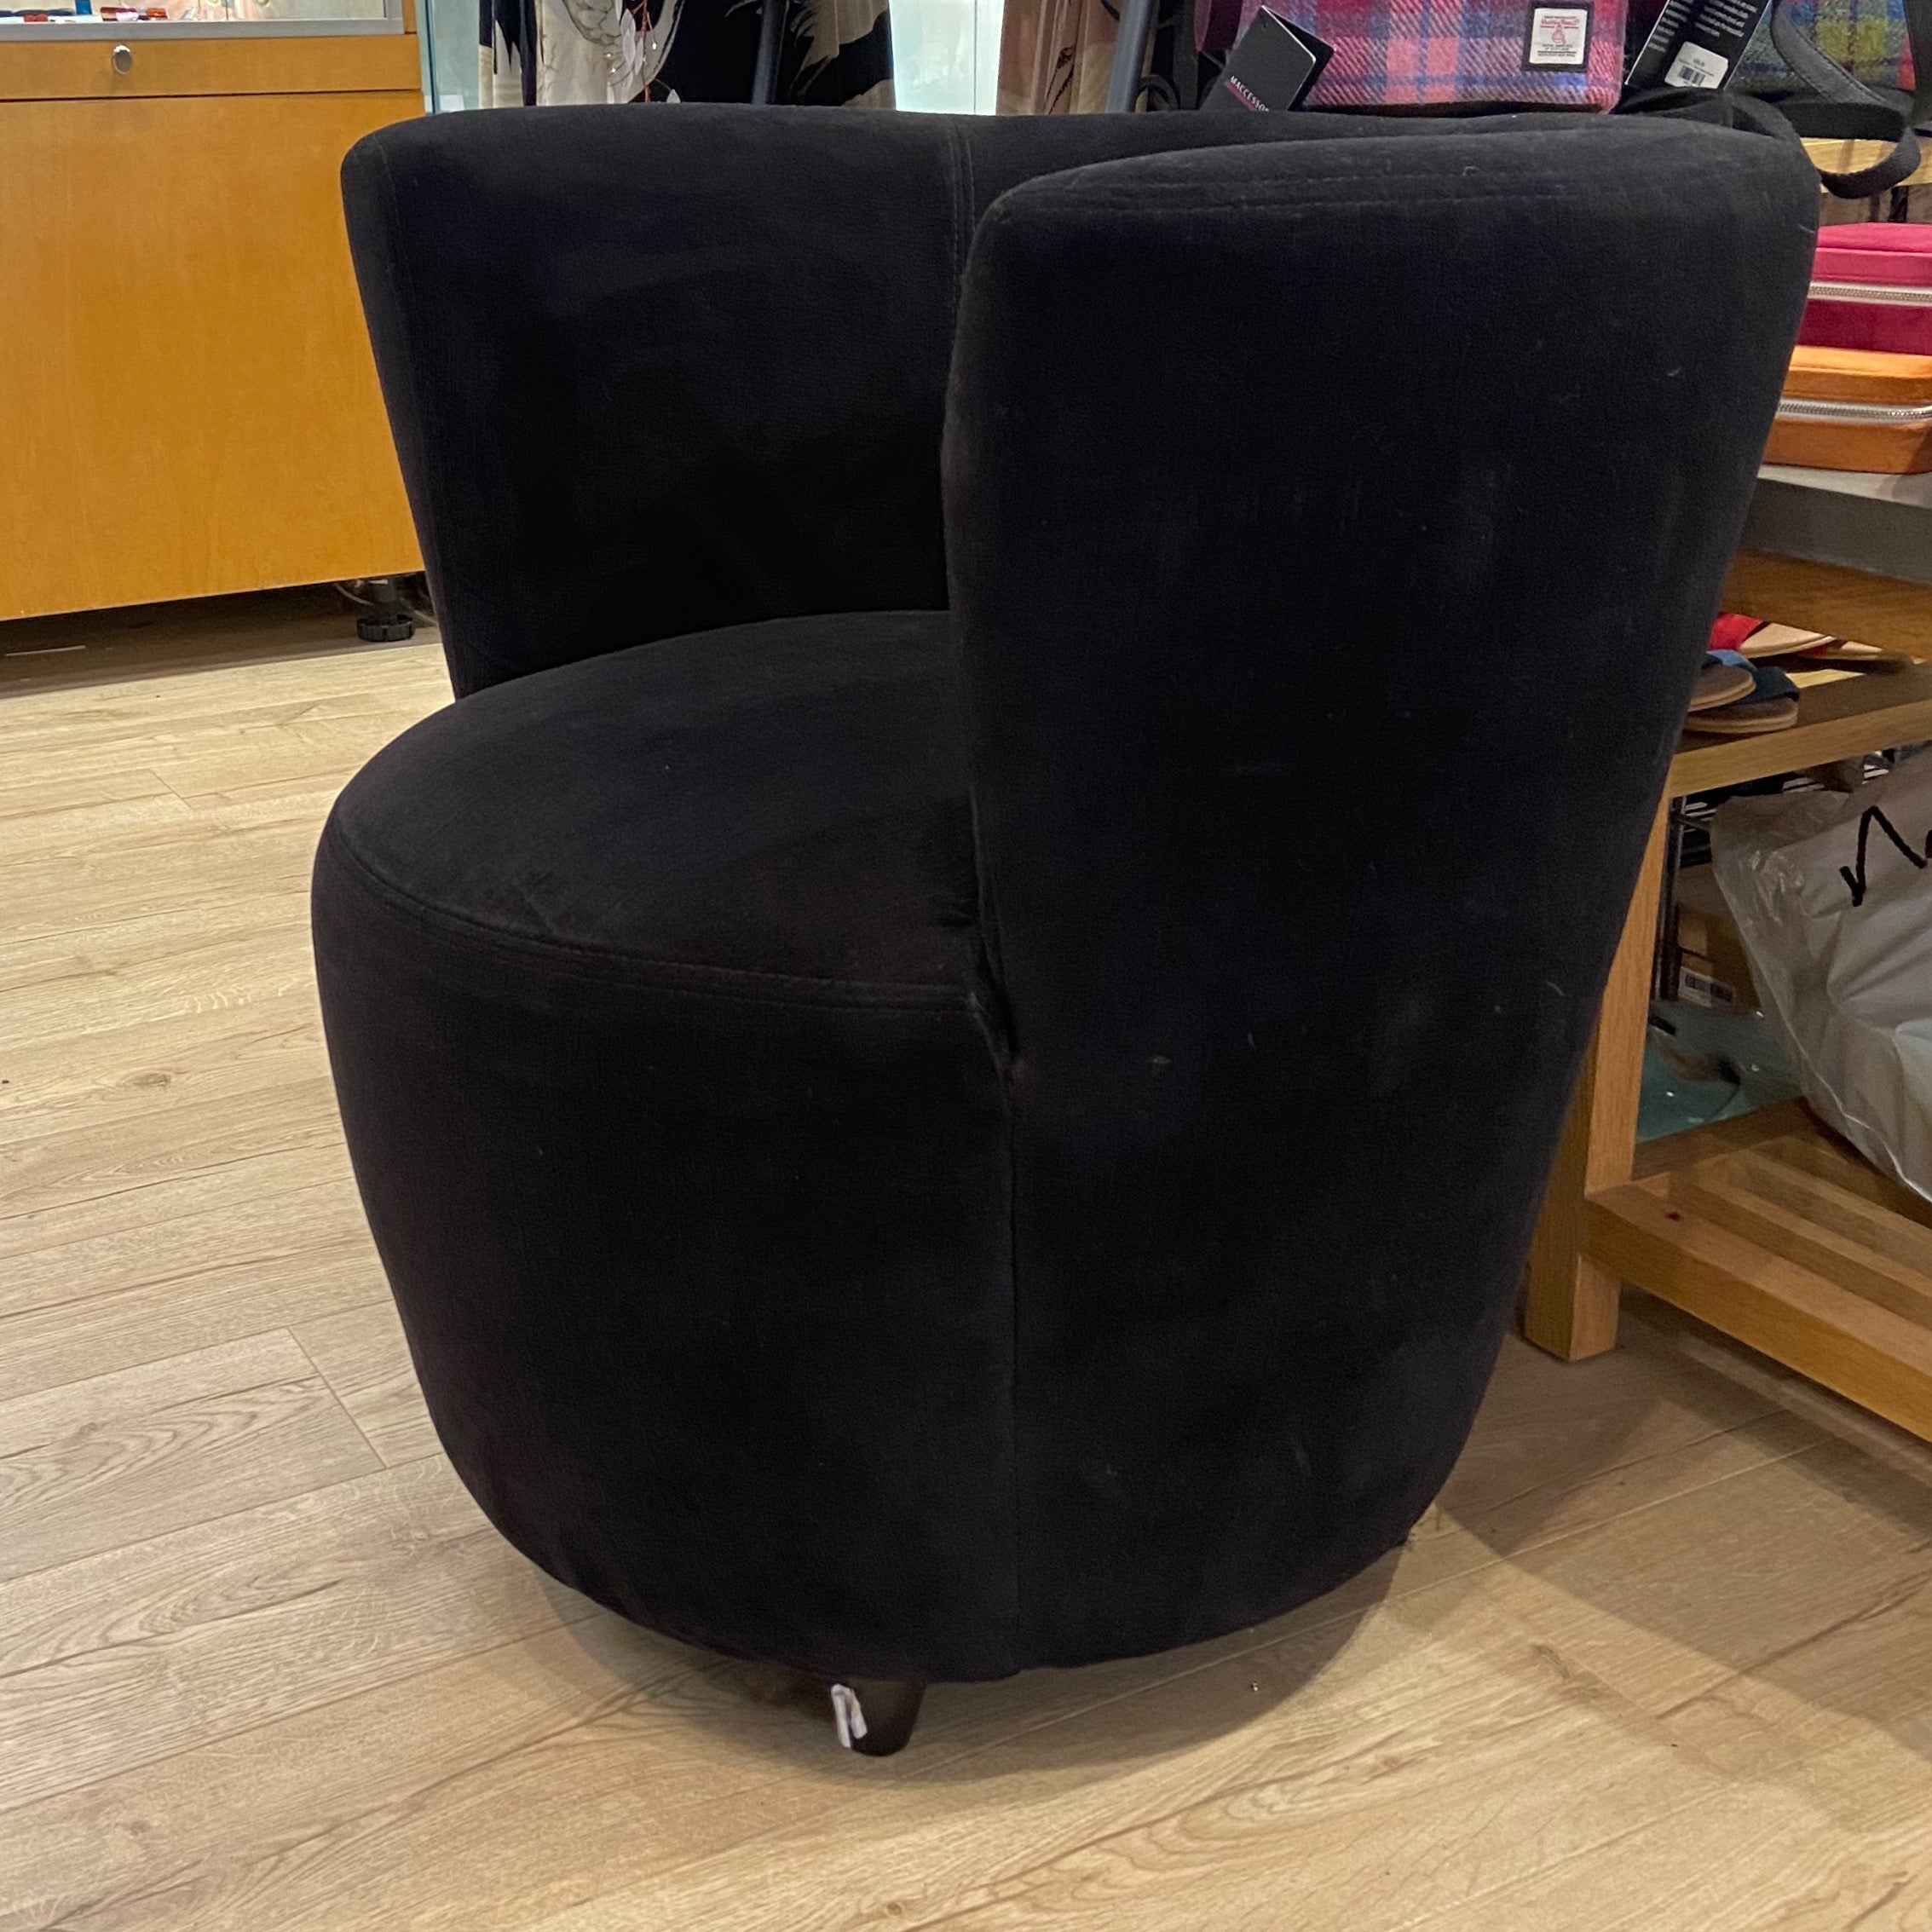 Black Hugo Chair - Last one in stock - The Nancy Smillie Shop - Art, Jewellery & Designer Gifts Glasgow